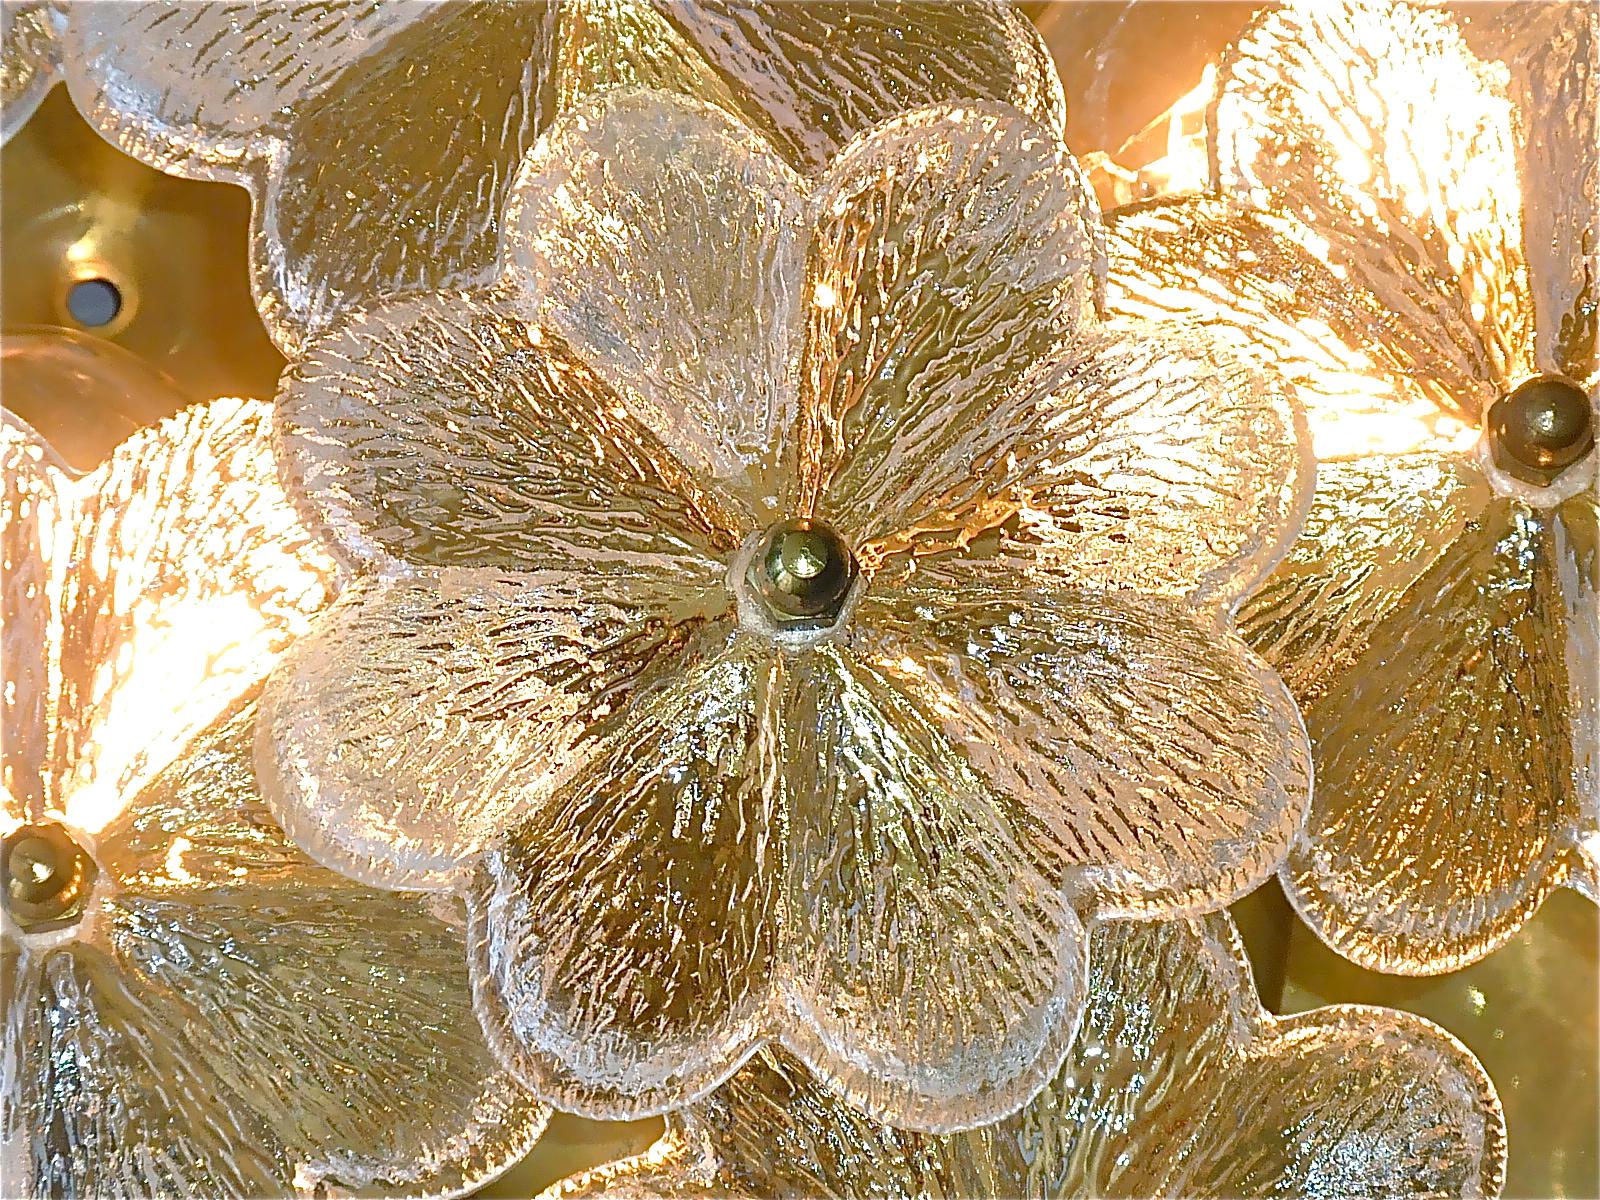 Pair Ernst Palme Floral Glass Brass Wall Ceiling Light Flush Mount Sconces 1960s For Sale 6